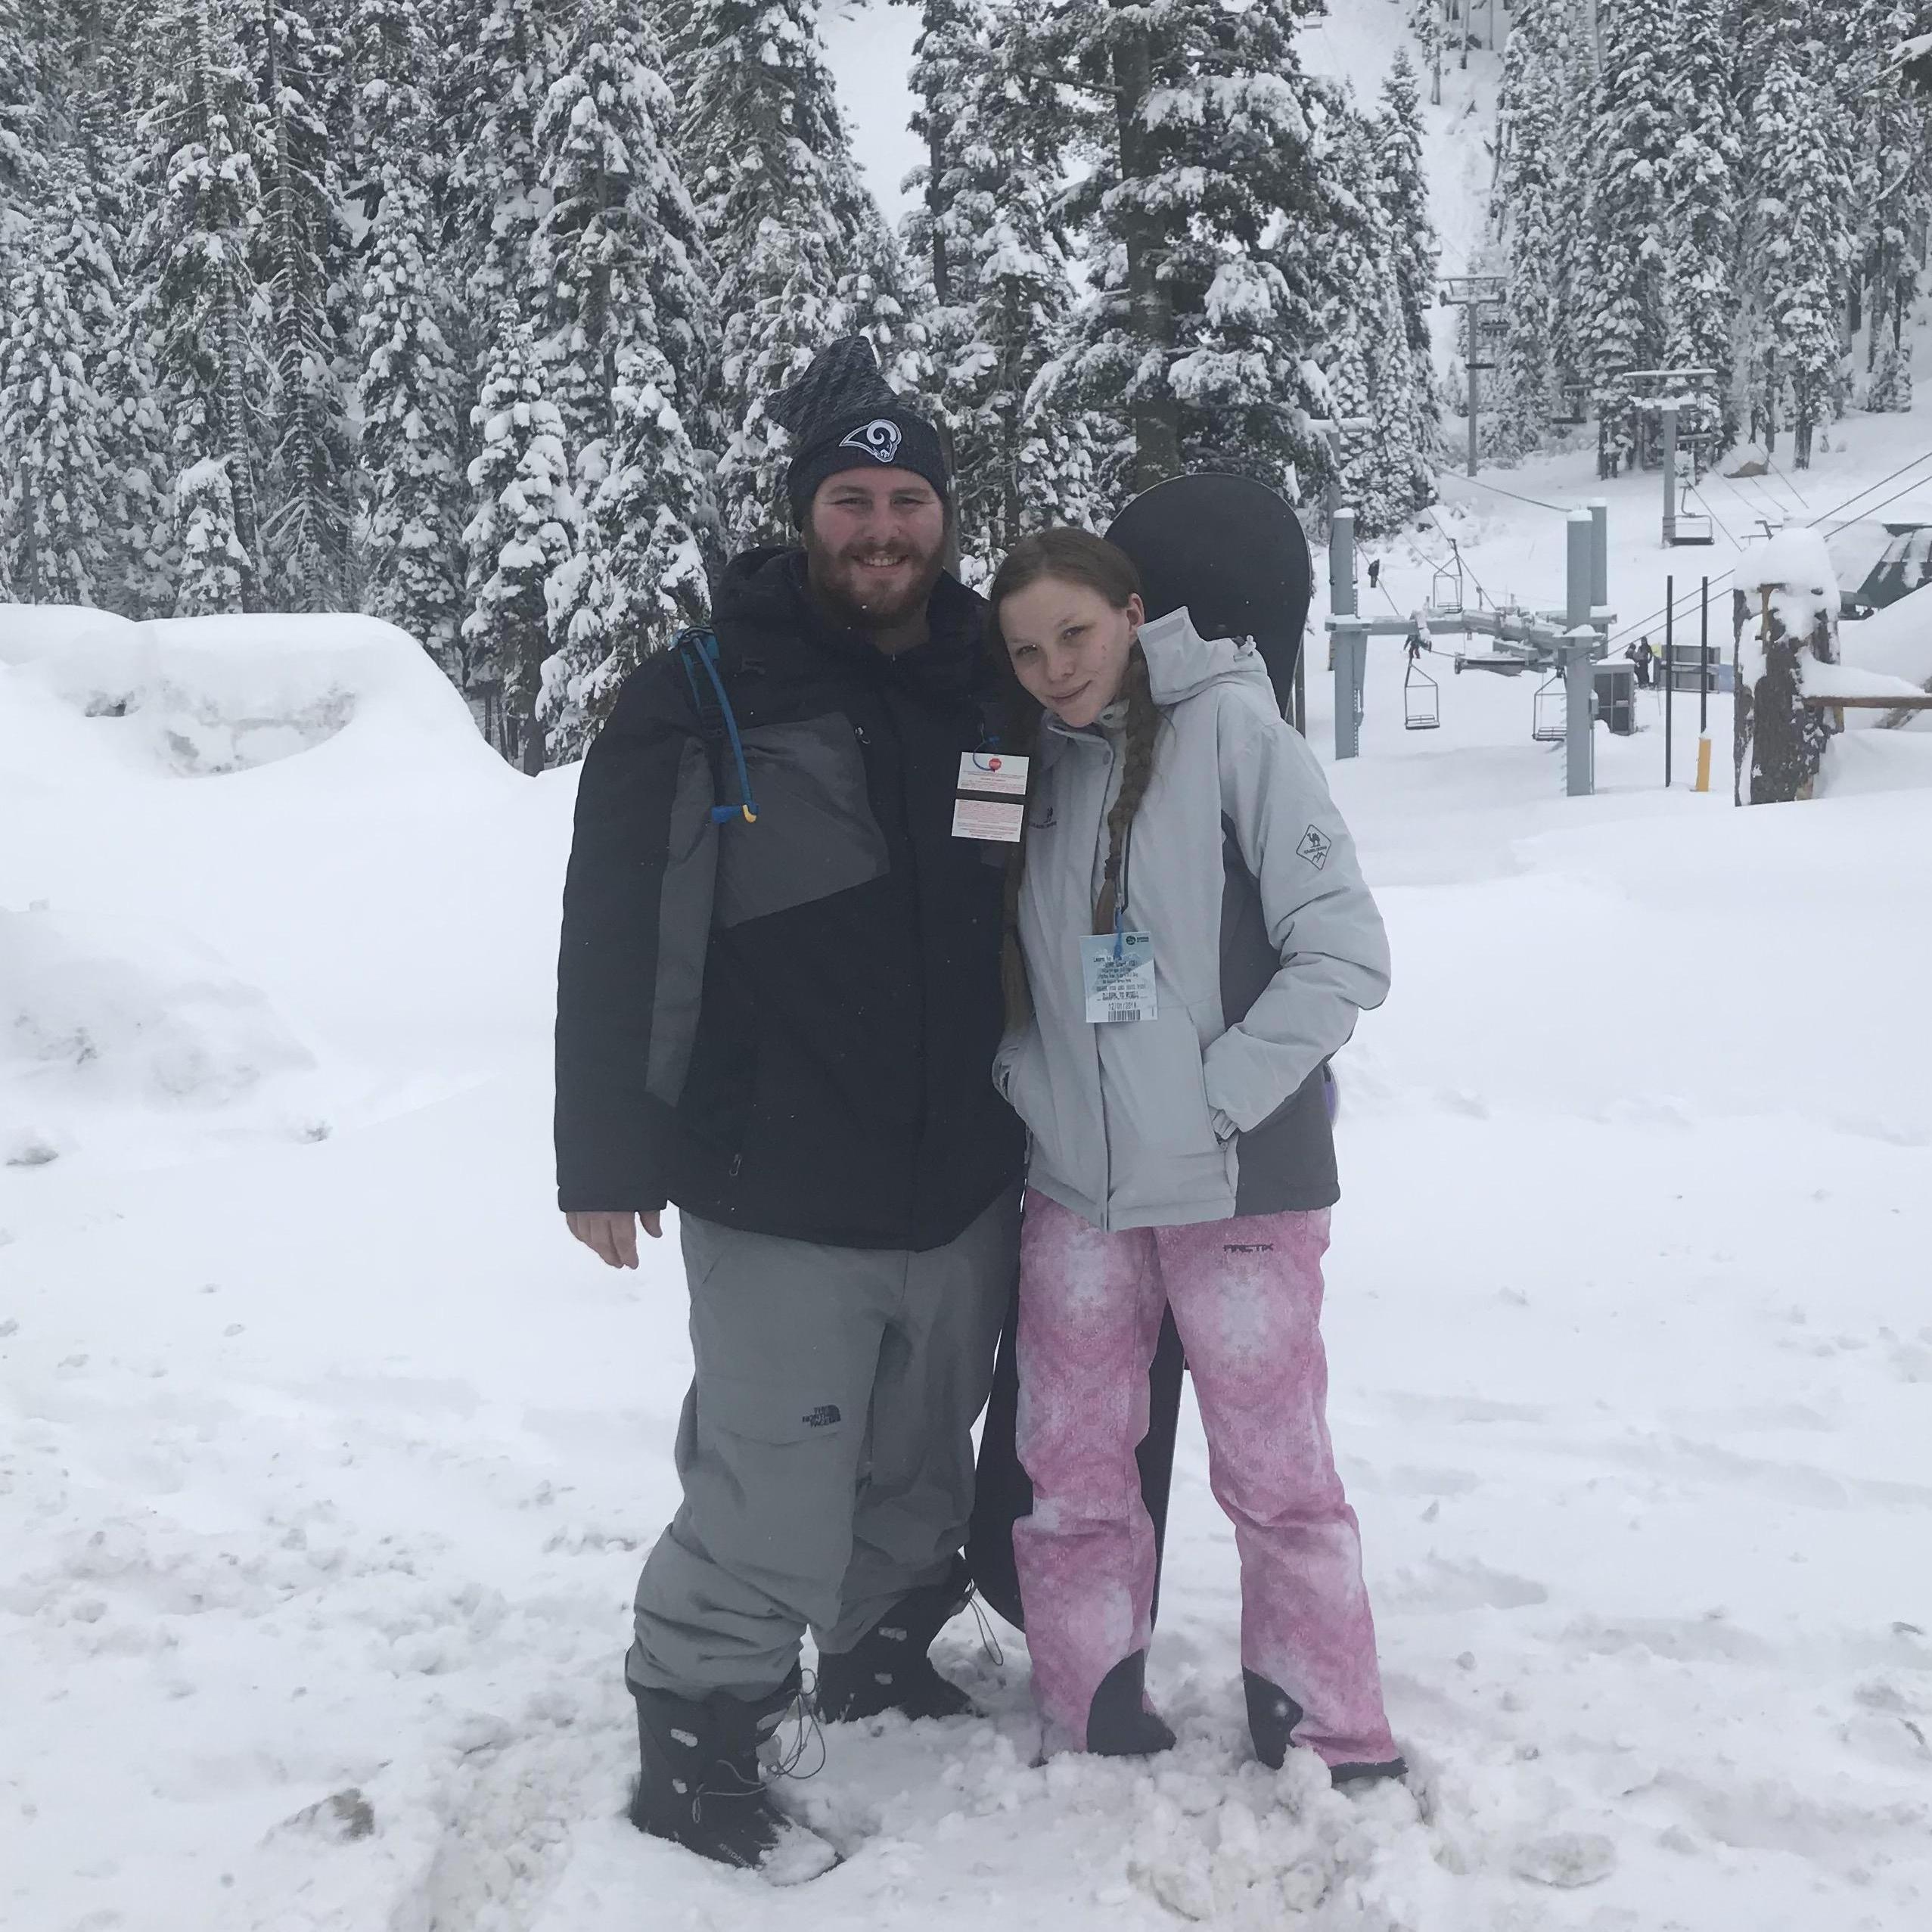 December 1, 2018 - Our First Lake Tahoe trip